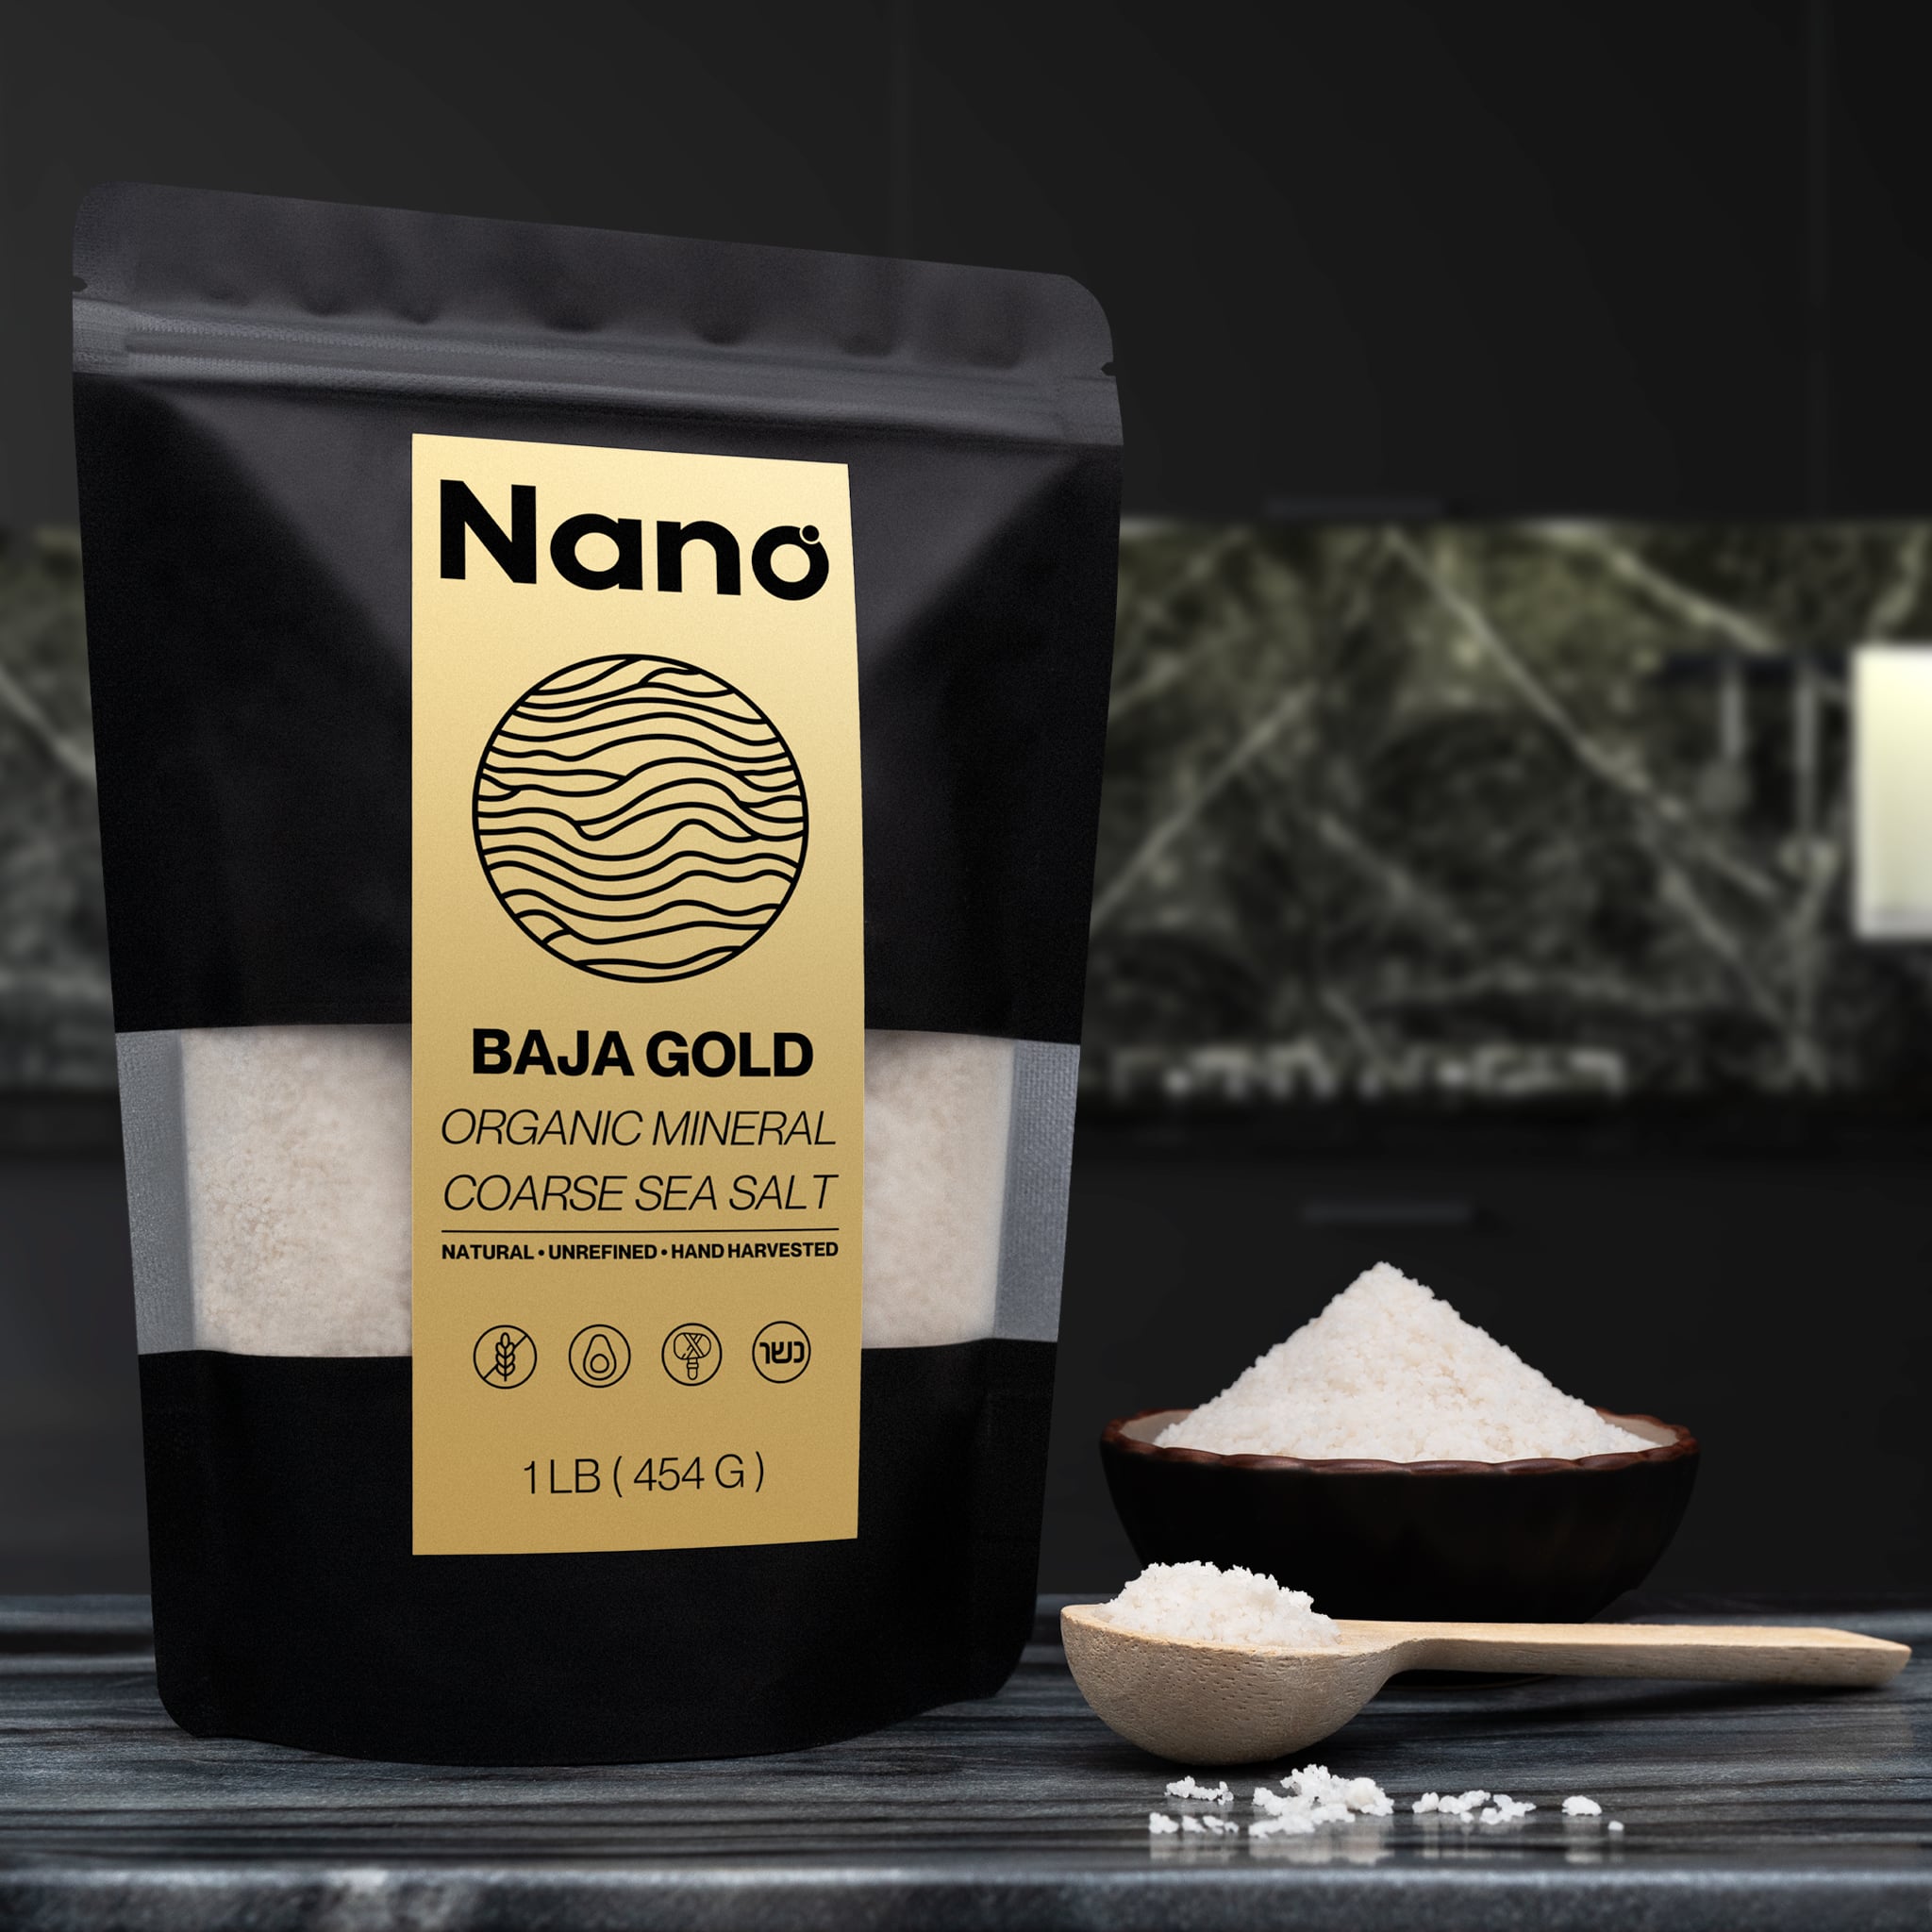 1 LB bag of Nano Baja Gold Sea Salt sitting on a marble countertop in a modern kitchen